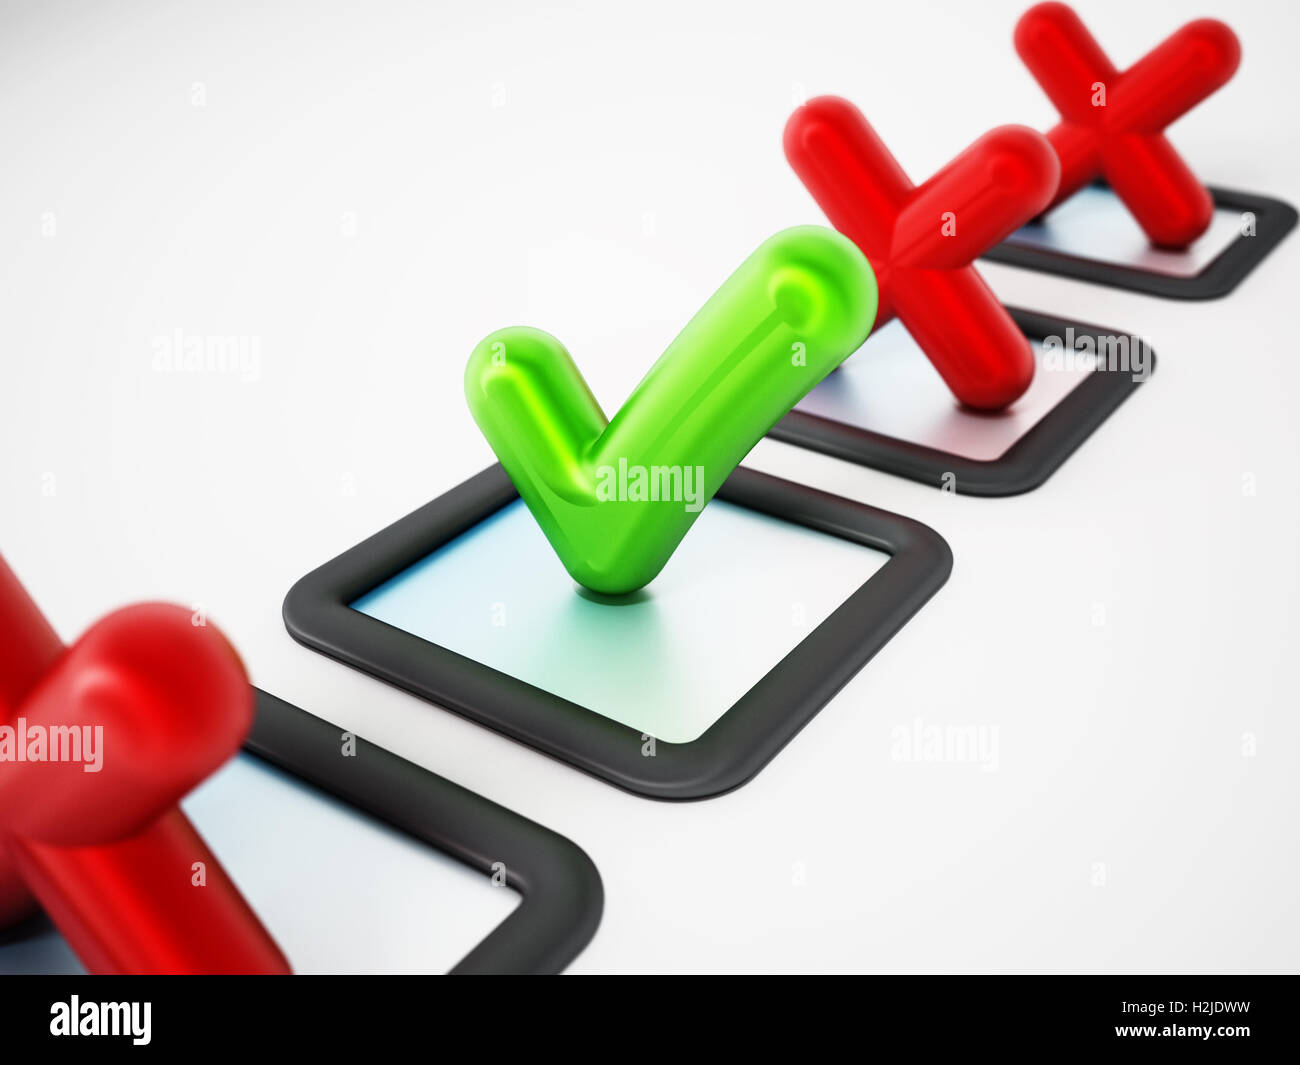 Grünes Häkchen-Symbol unter rote Kreuze. 3D Illustration. Stockfoto